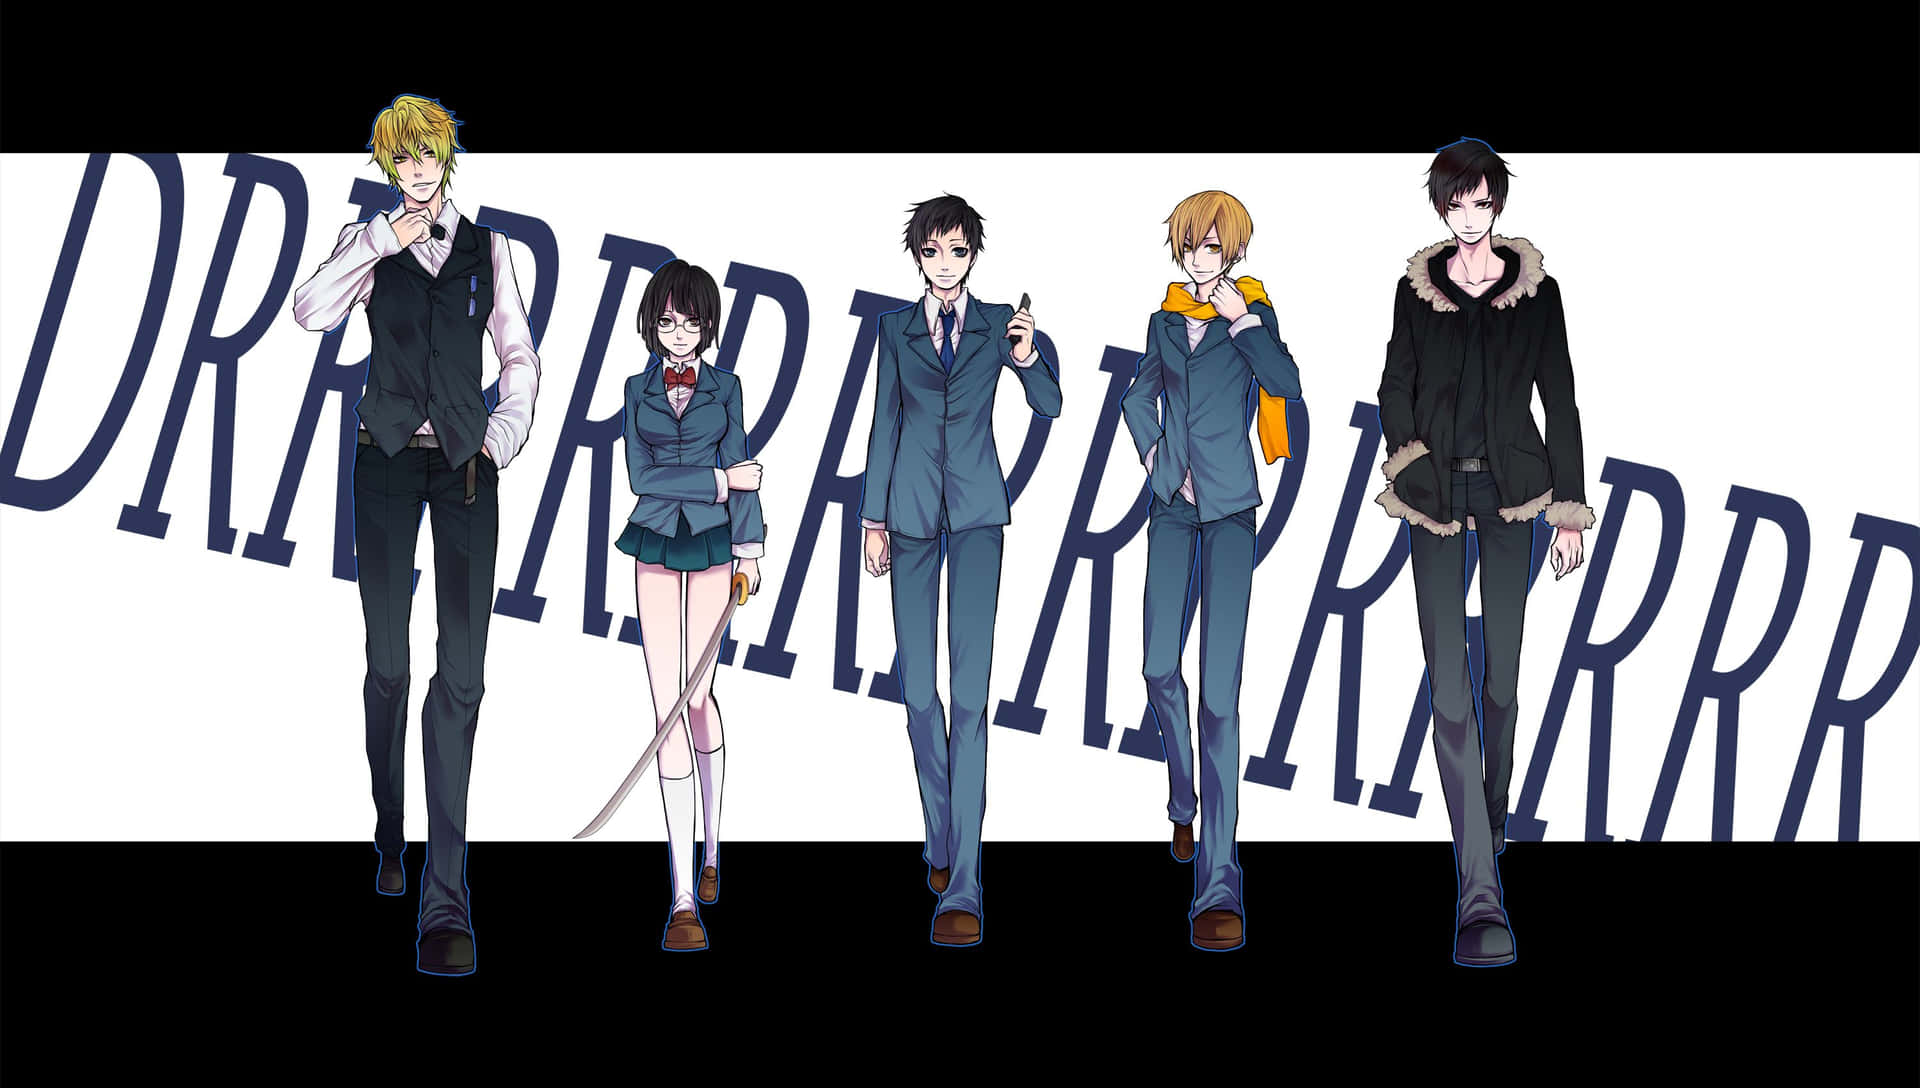 Durarara! Action-packed Anime Series Characters Wallpaper Wallpaper